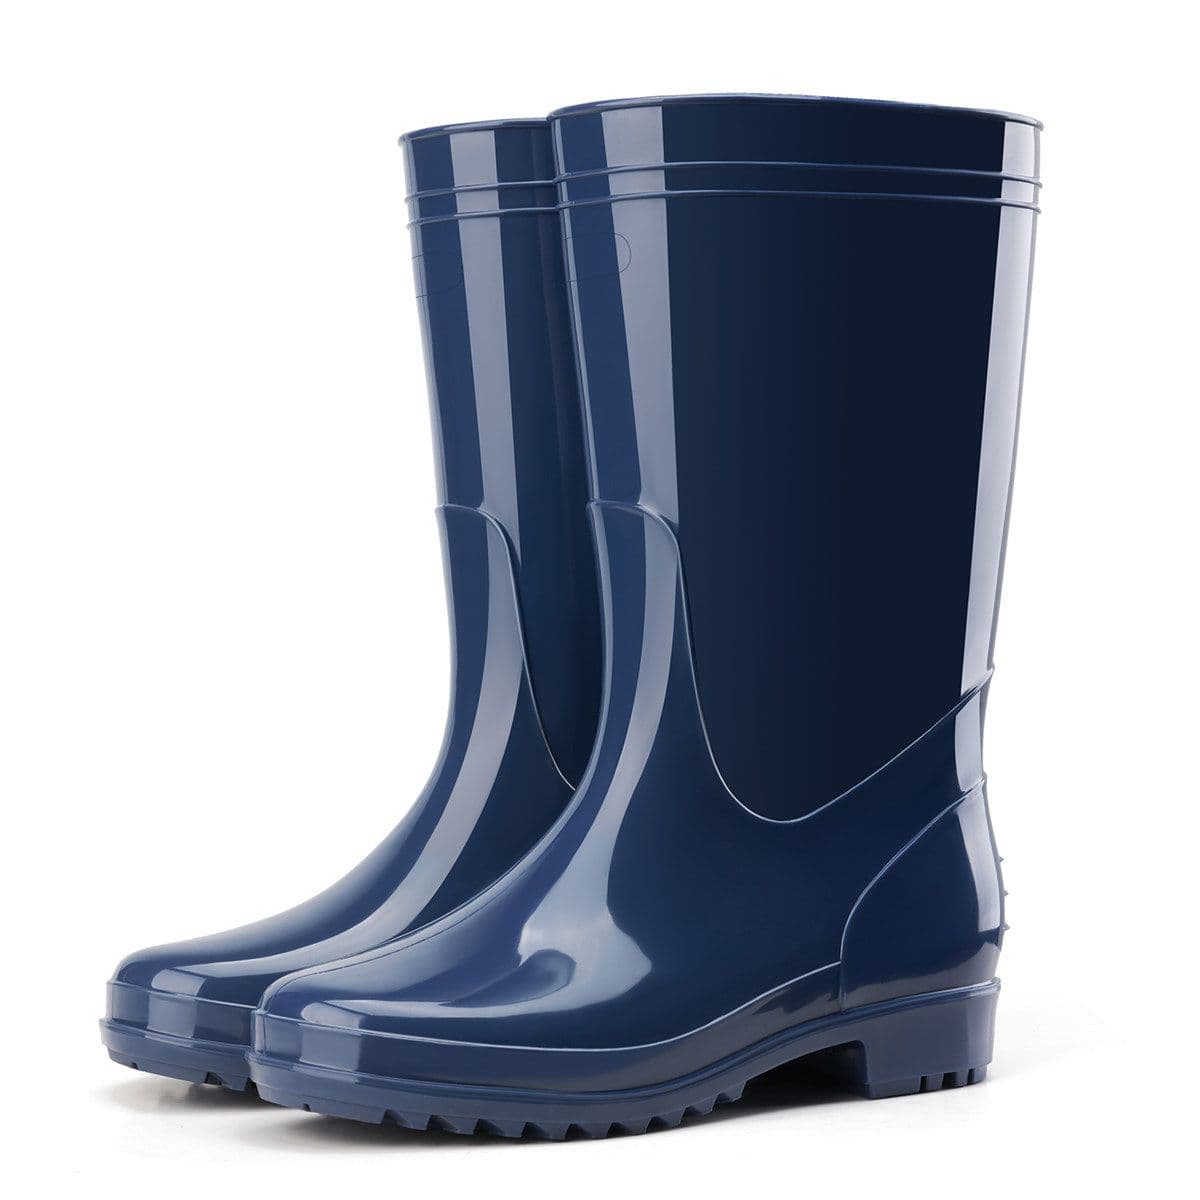 Hisea Women's Ankle Rain Boots, Rubber Fishing Deck Boots, Garden Boots for Women Waterproof